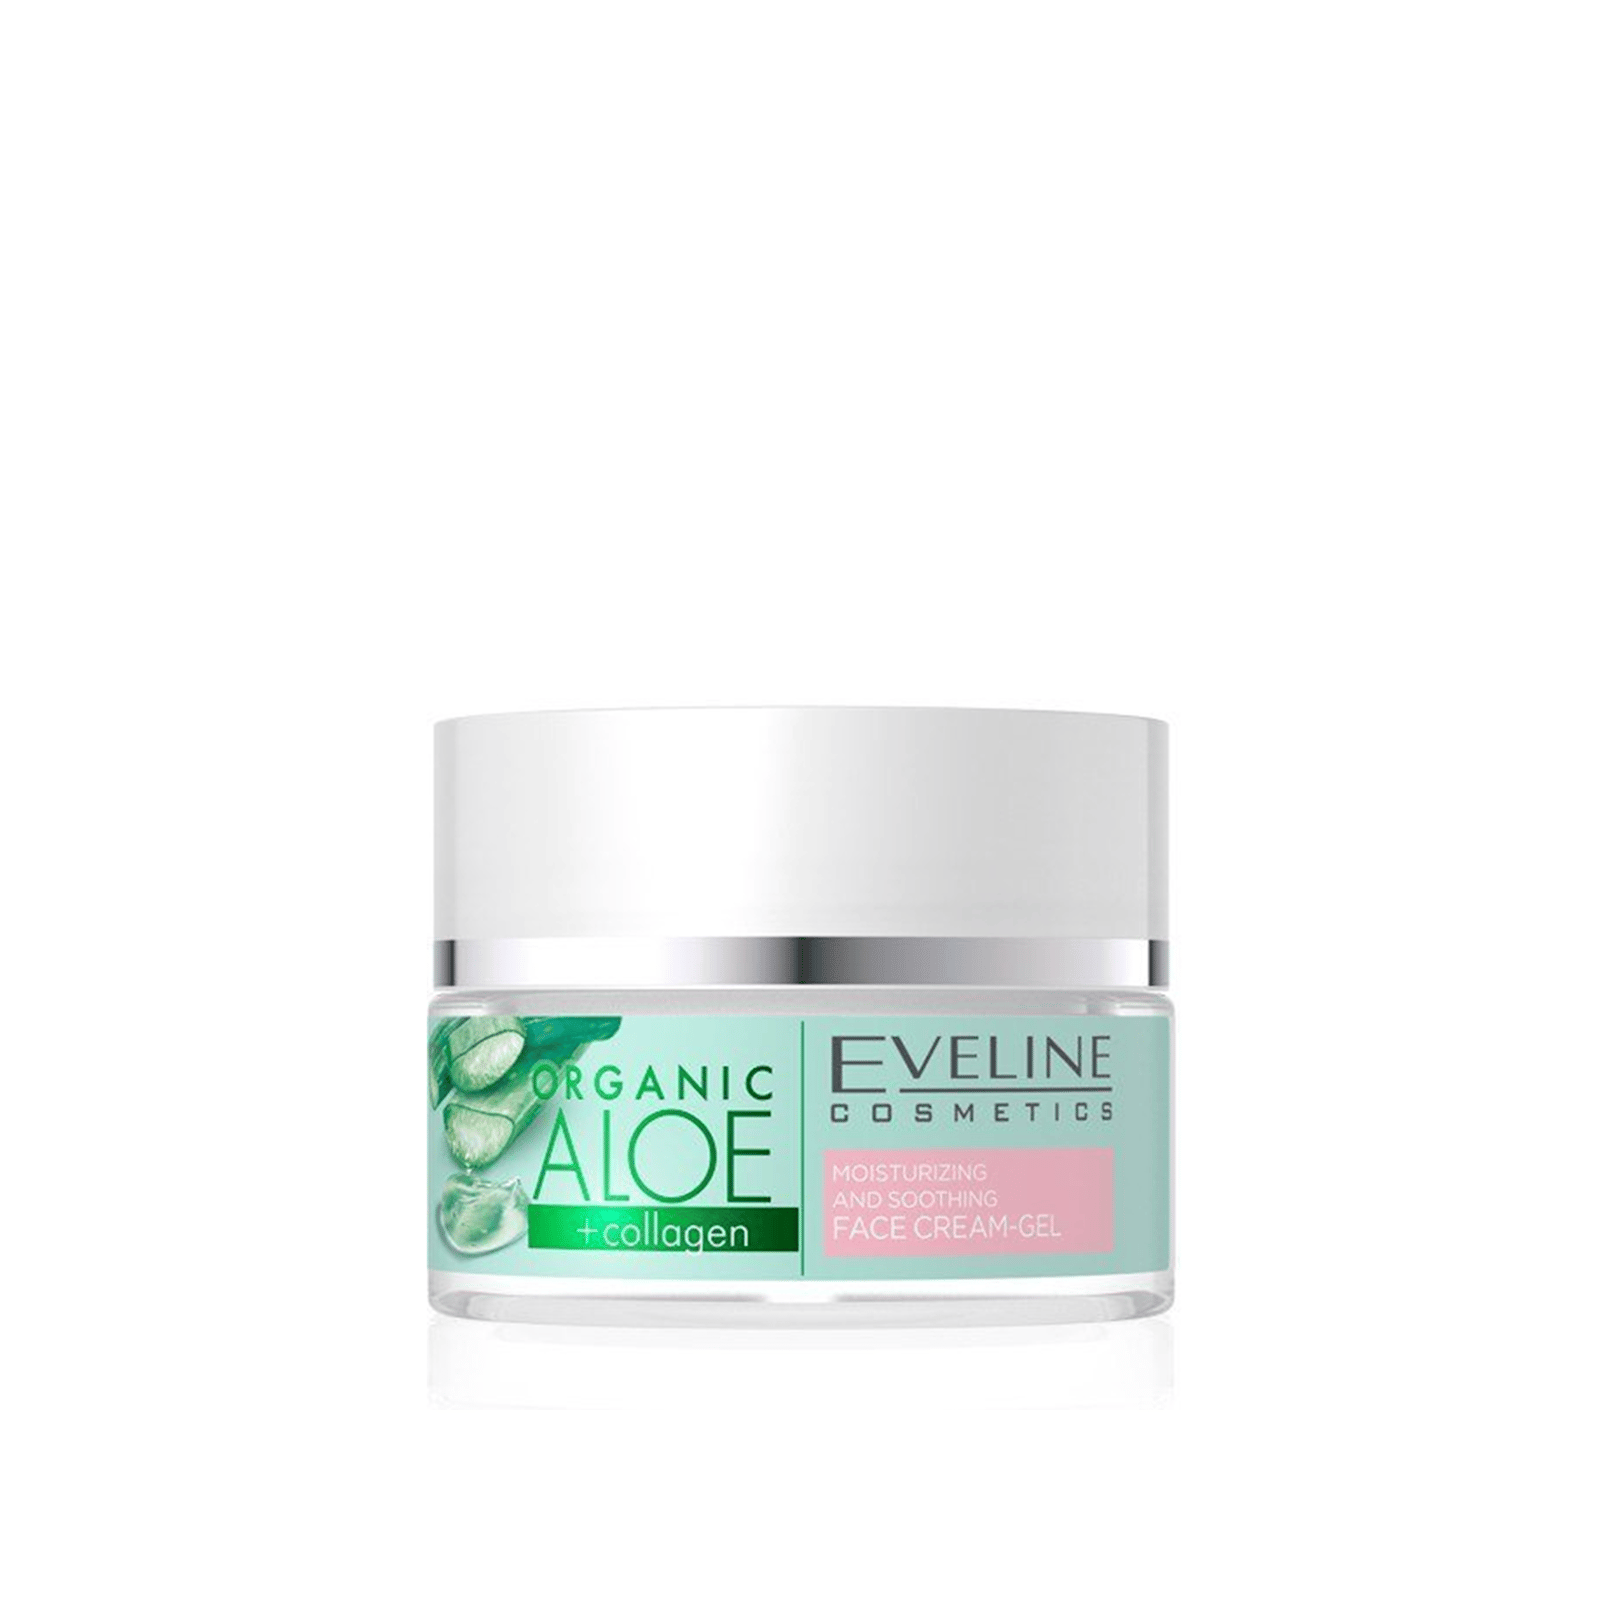 Eveline Cosmetics Organic Aloe Moisturizing and Soothing Face Cream-Gel 50ml